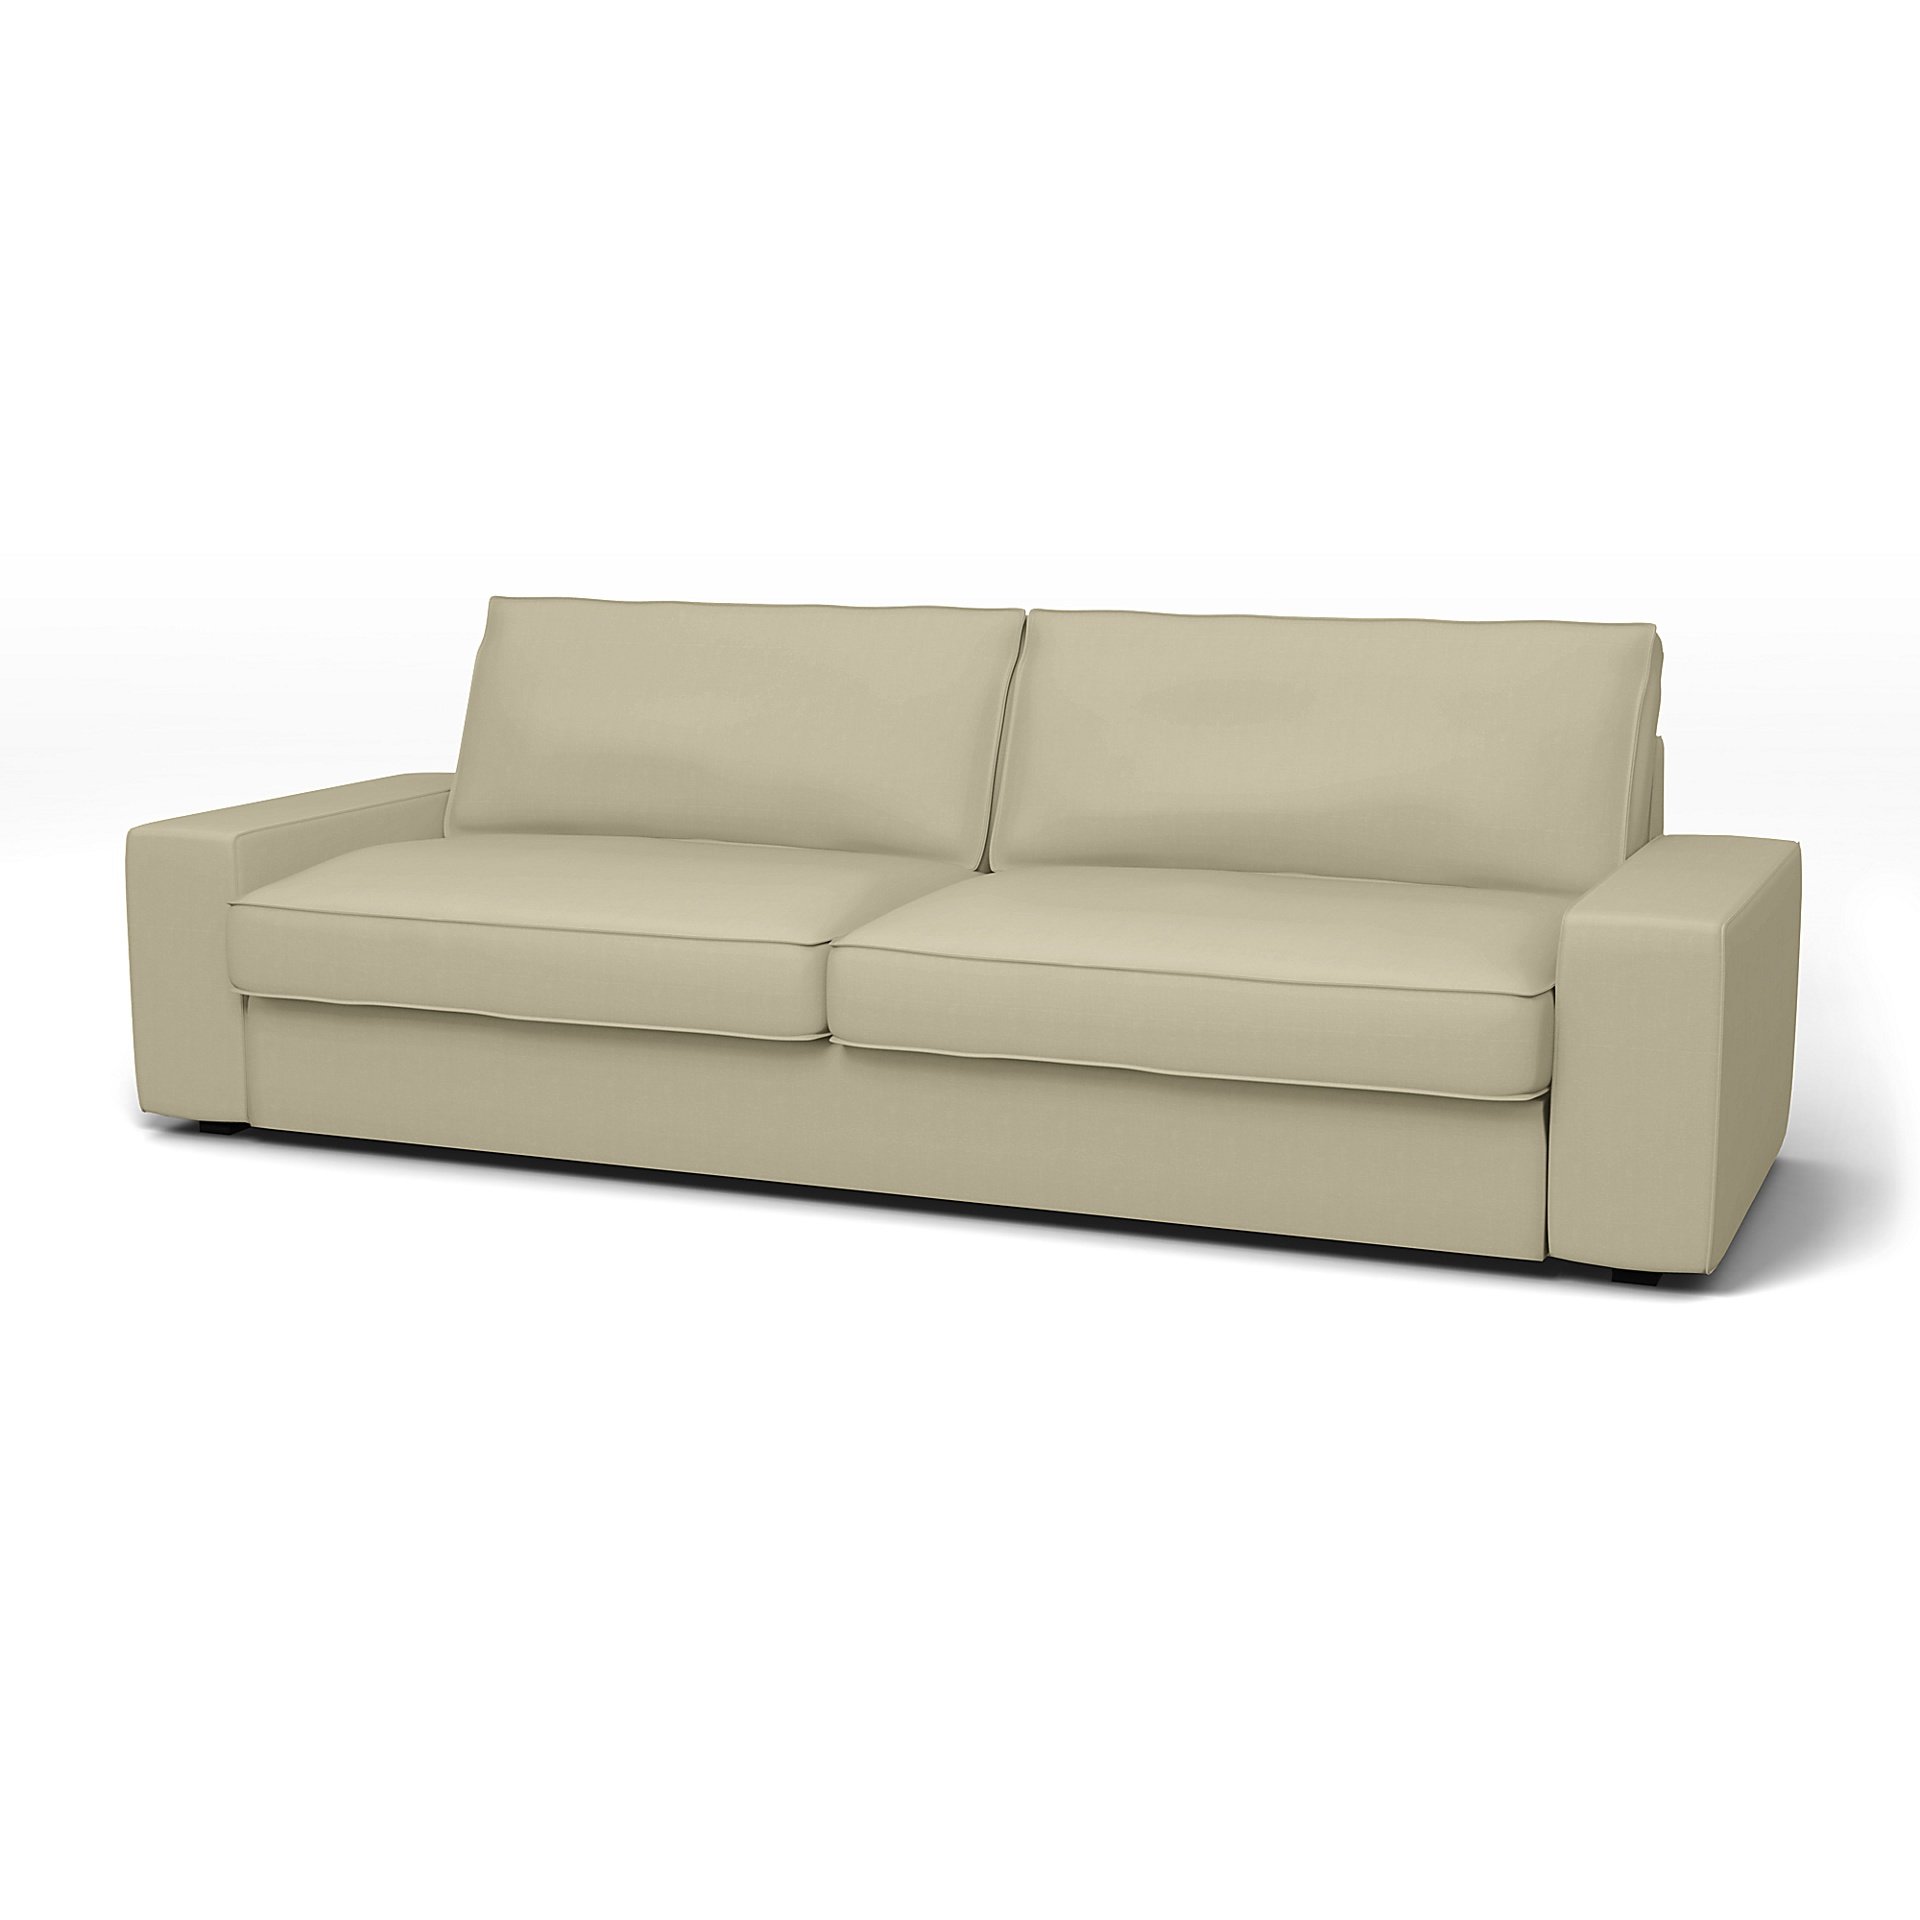 IKEA - Kivik Sofa Bed Cover, Sand Beige, Cotton - Bemz